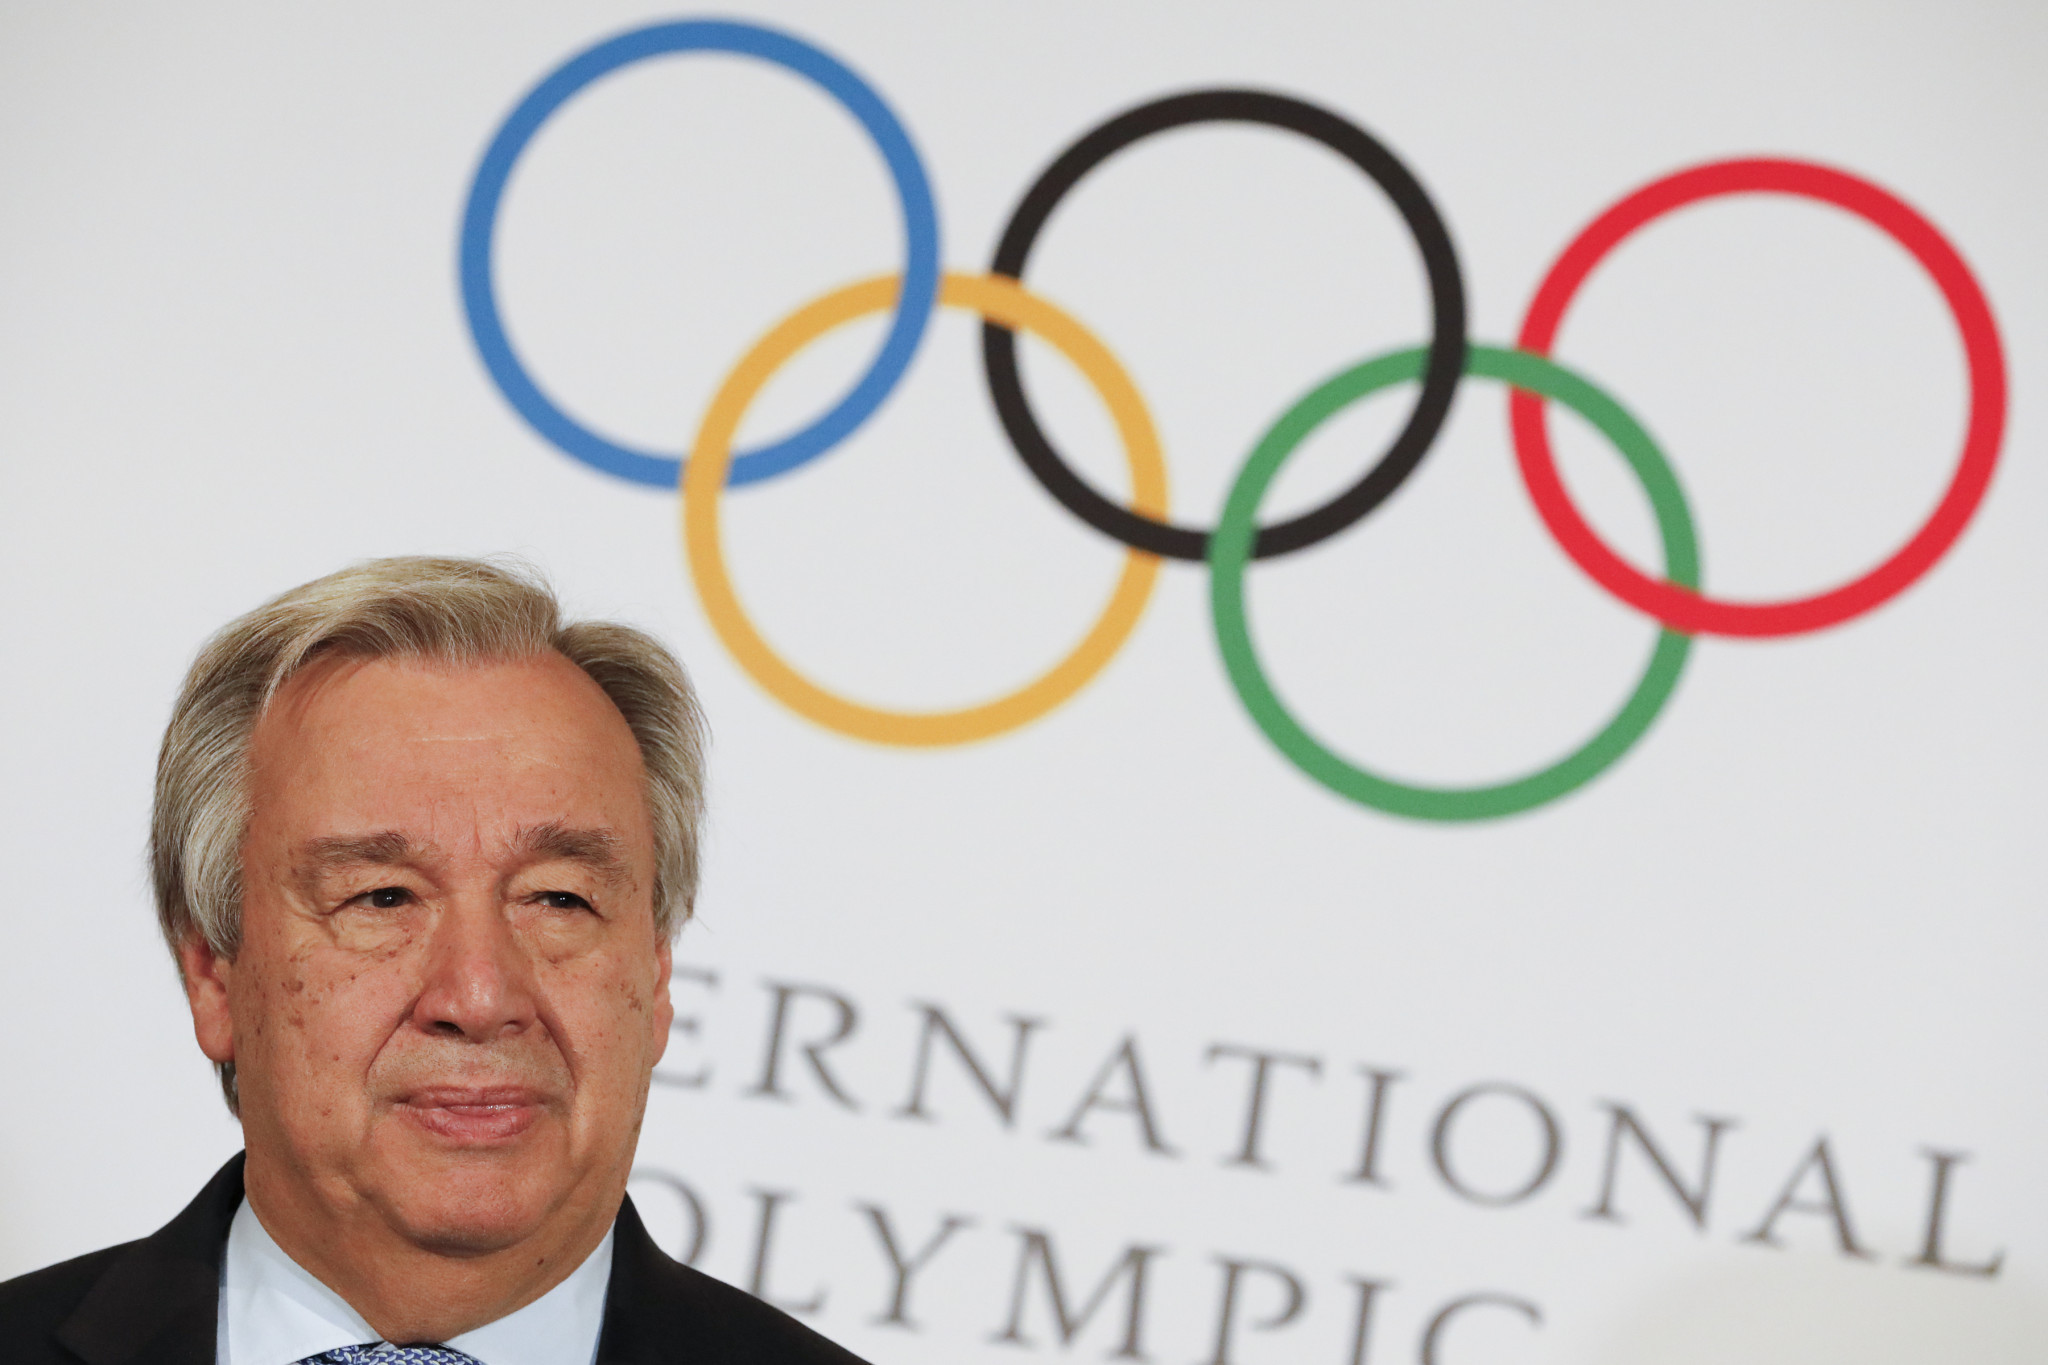 UN secretary general to attend Beijing 2022 after IOC invite